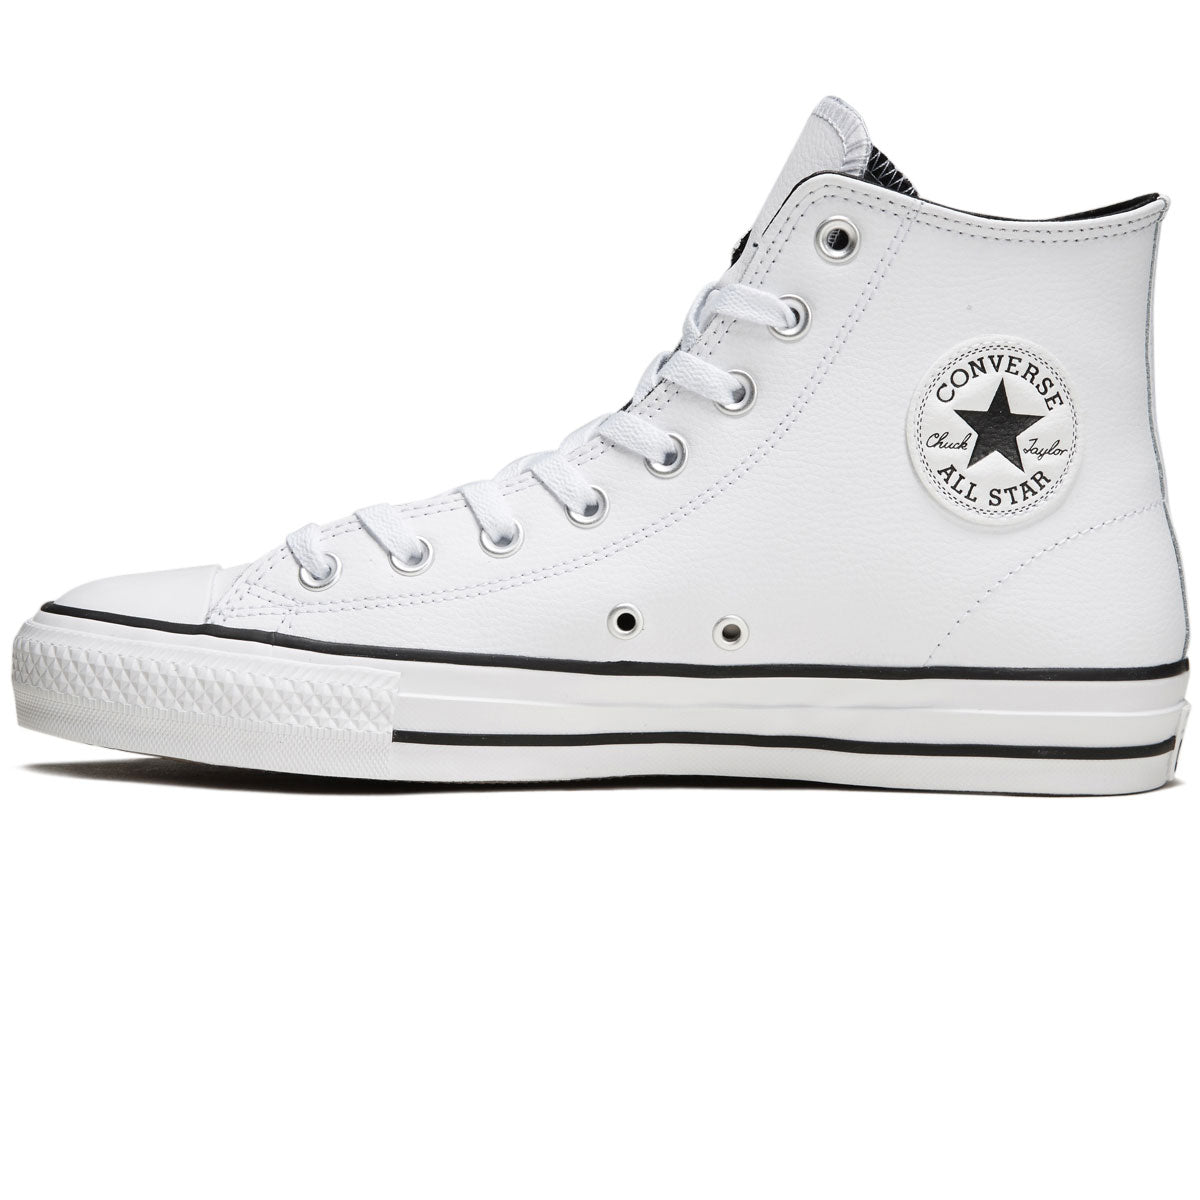 Converse Ctas Pro Hi Shoes - White/White/Black image 2